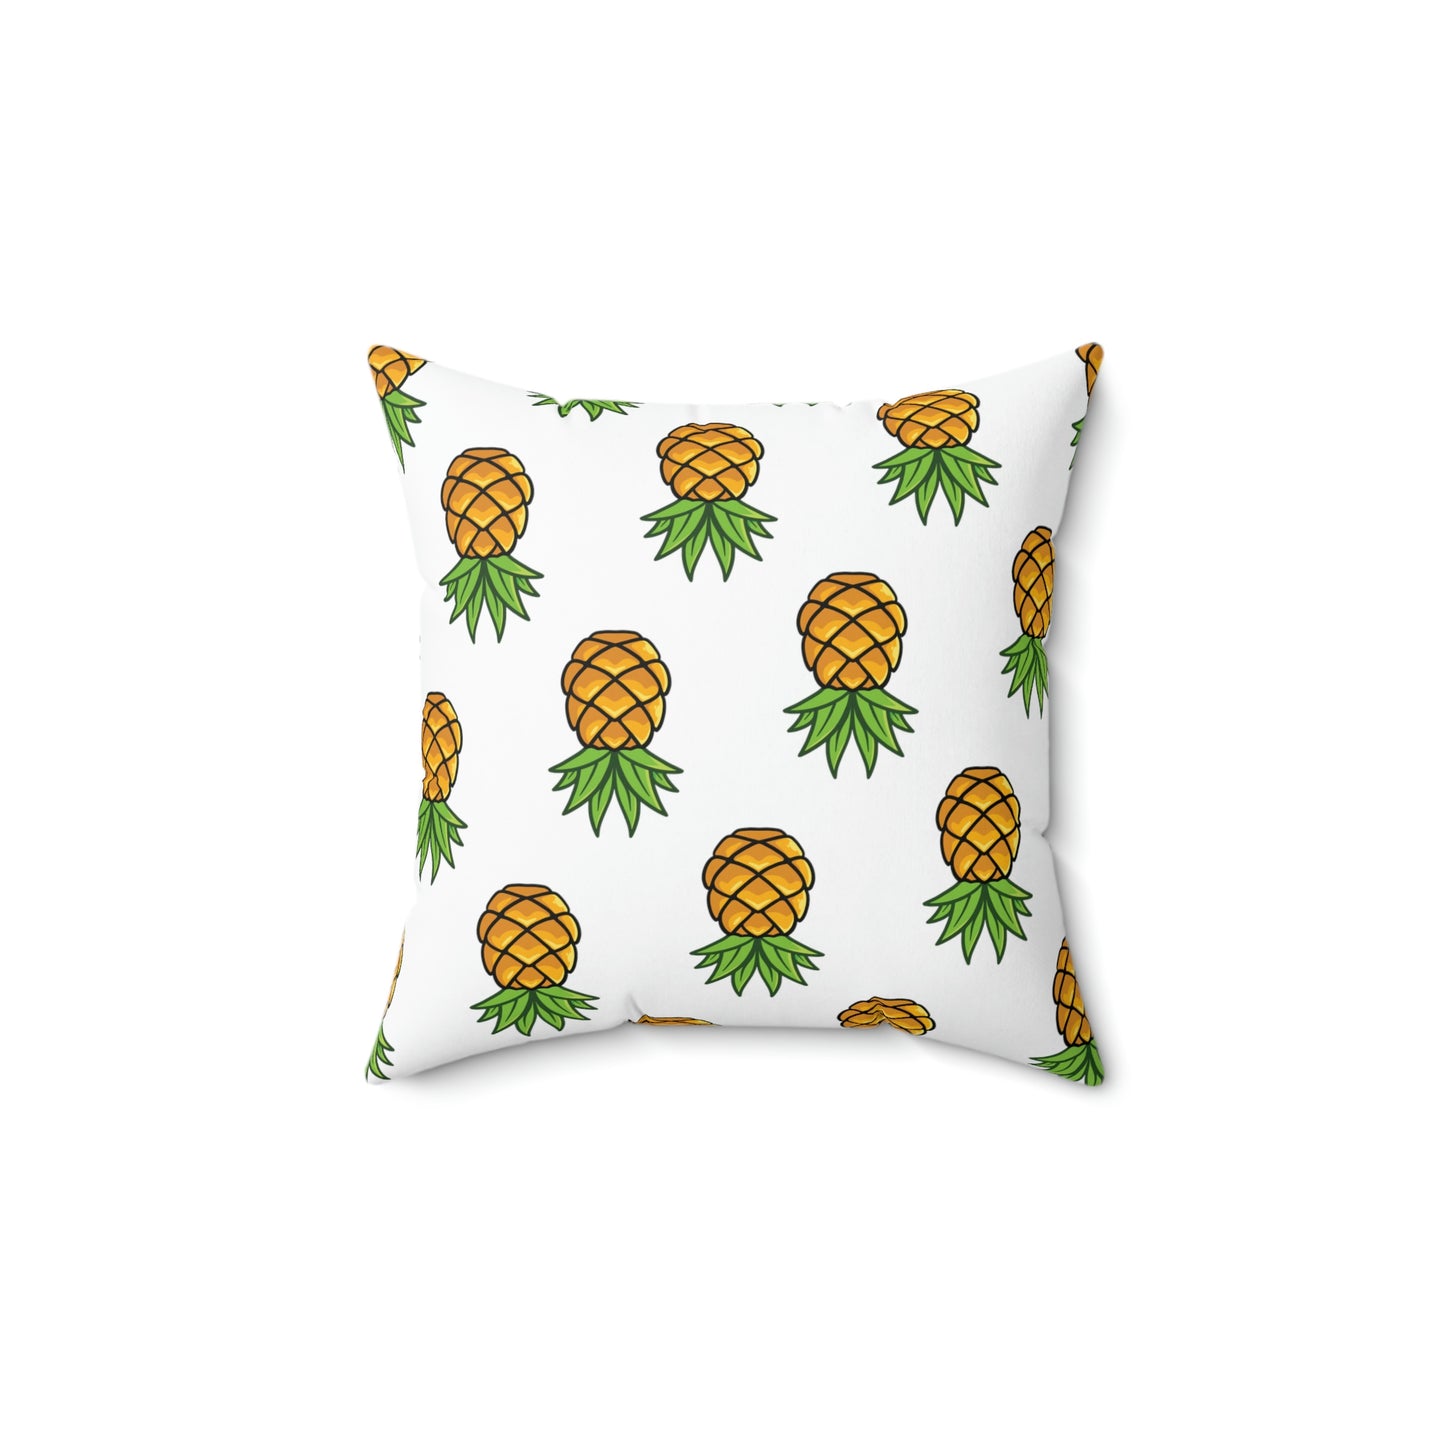 Pineapple-Spun Polyester Square Pillow